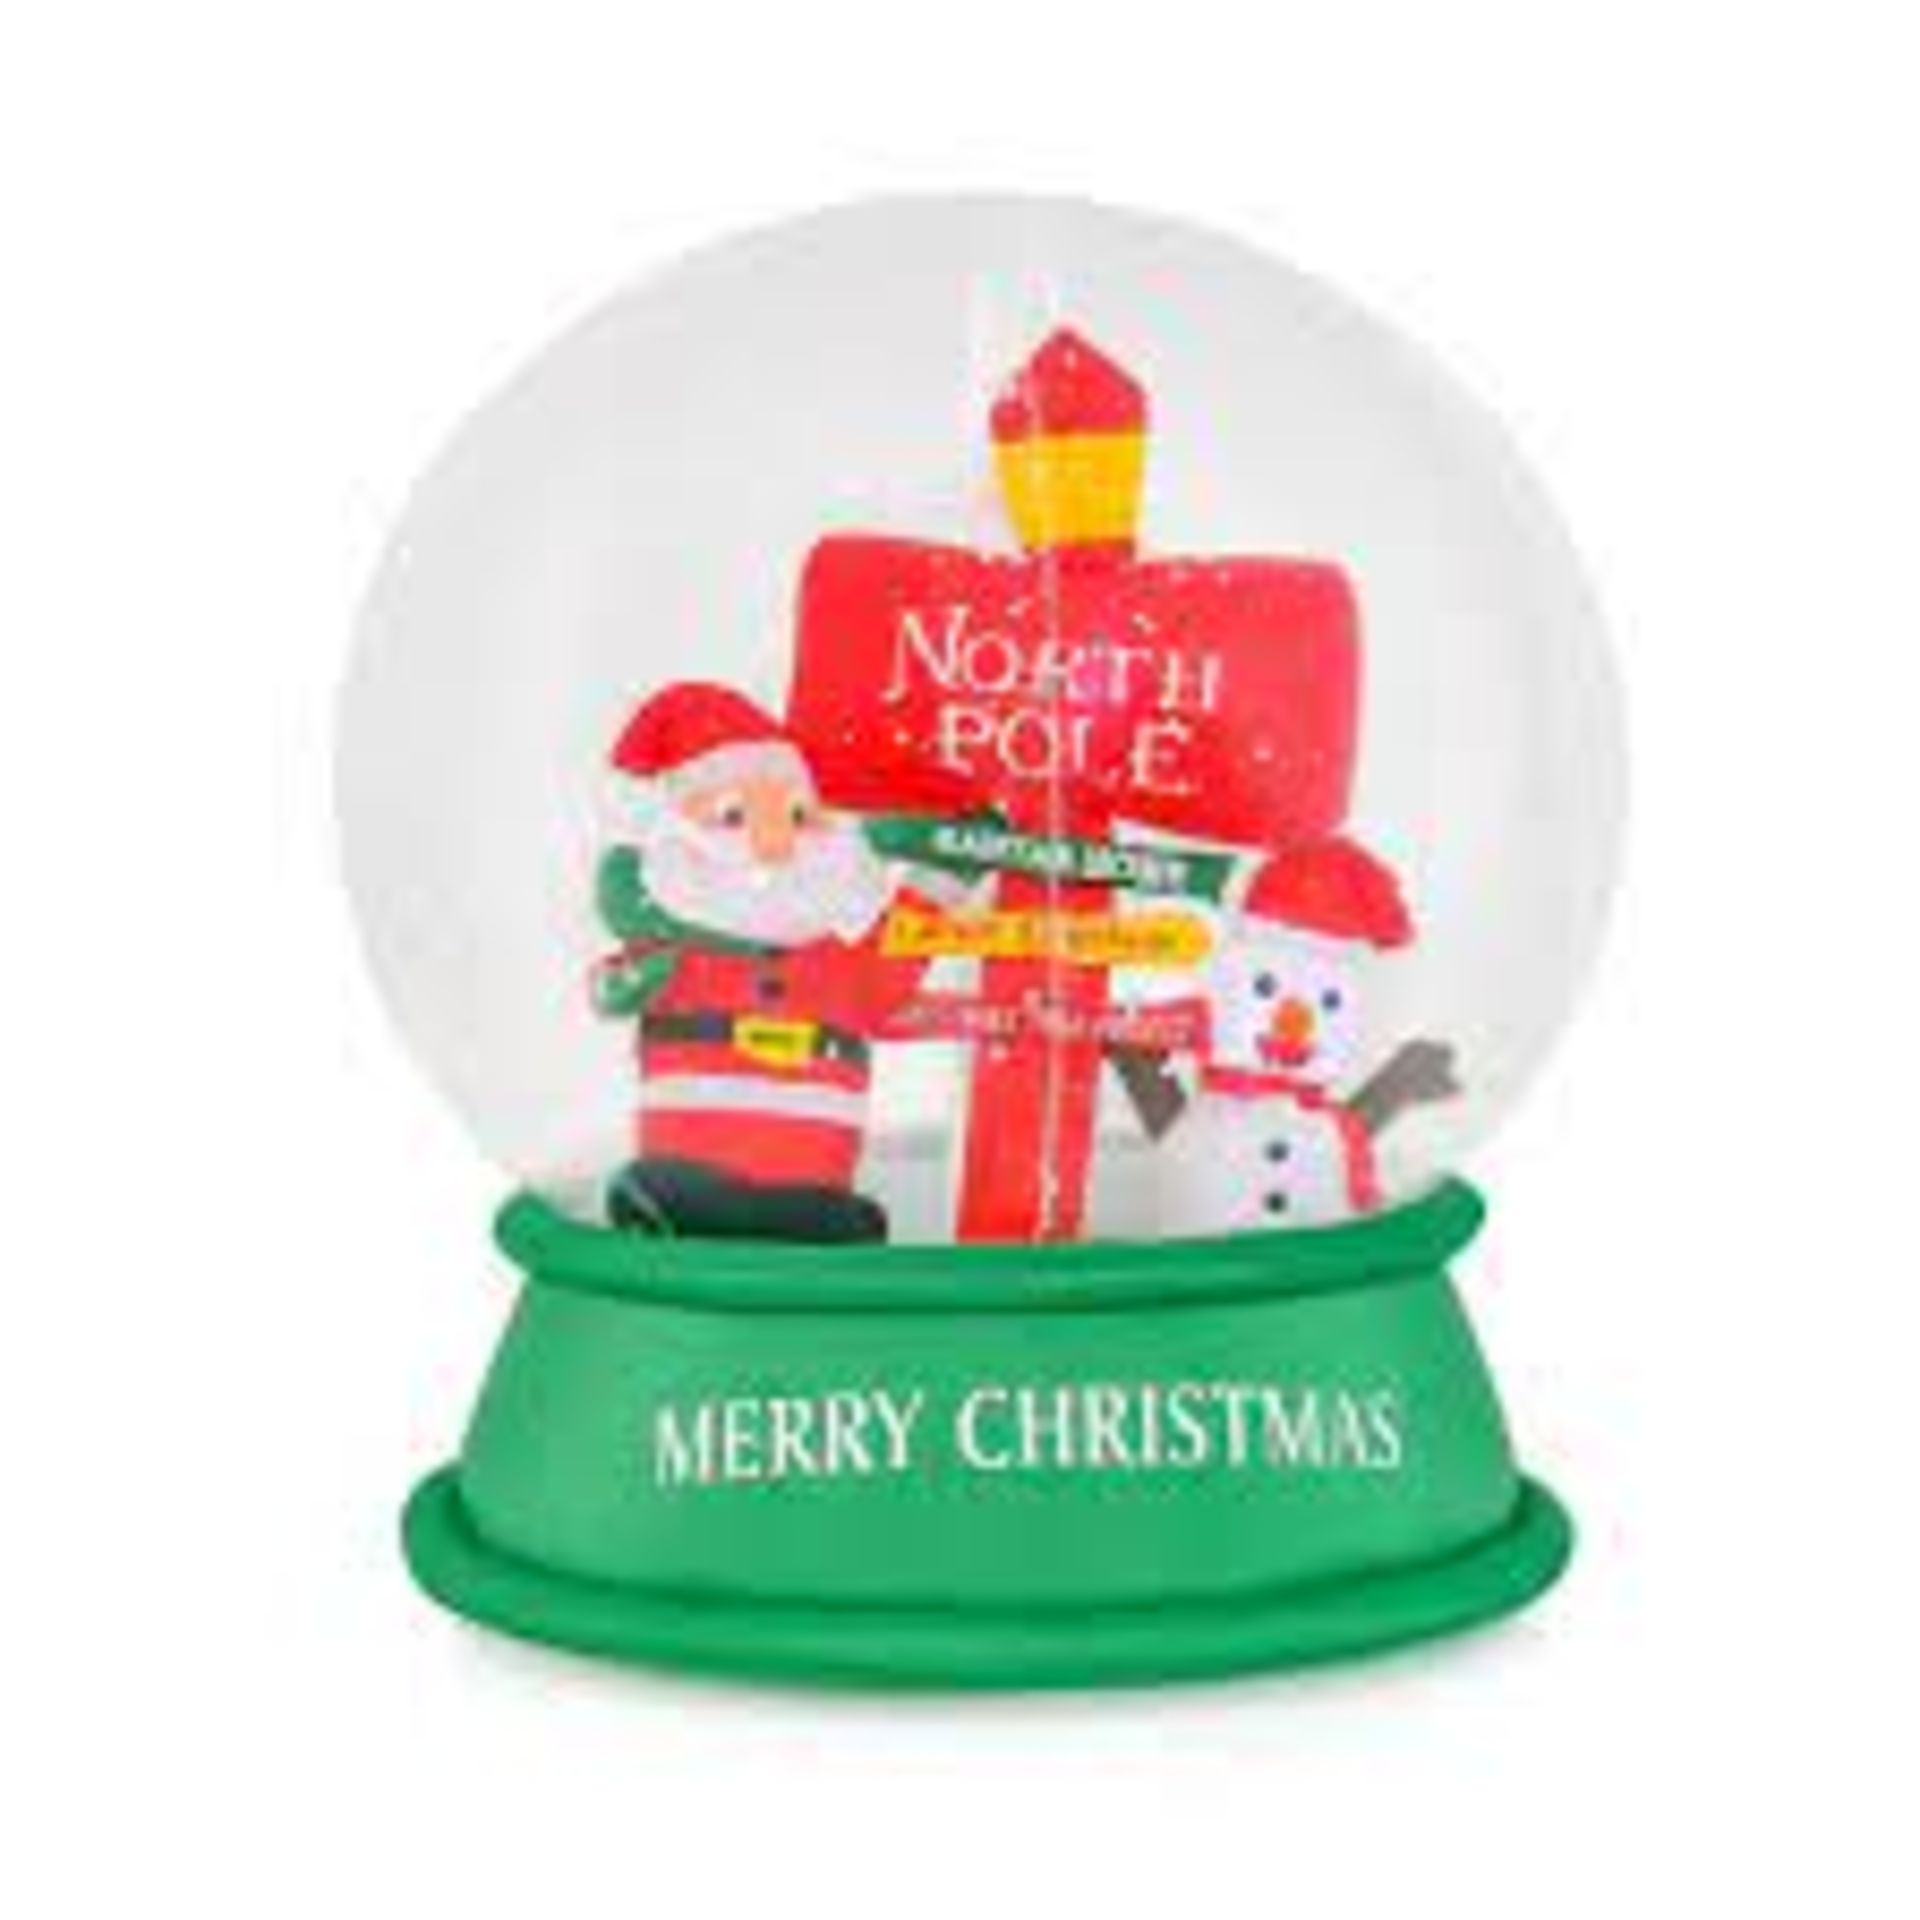 126 cm Christmas Light Up Crystal Ball Santa Snow Globe. -R13.10